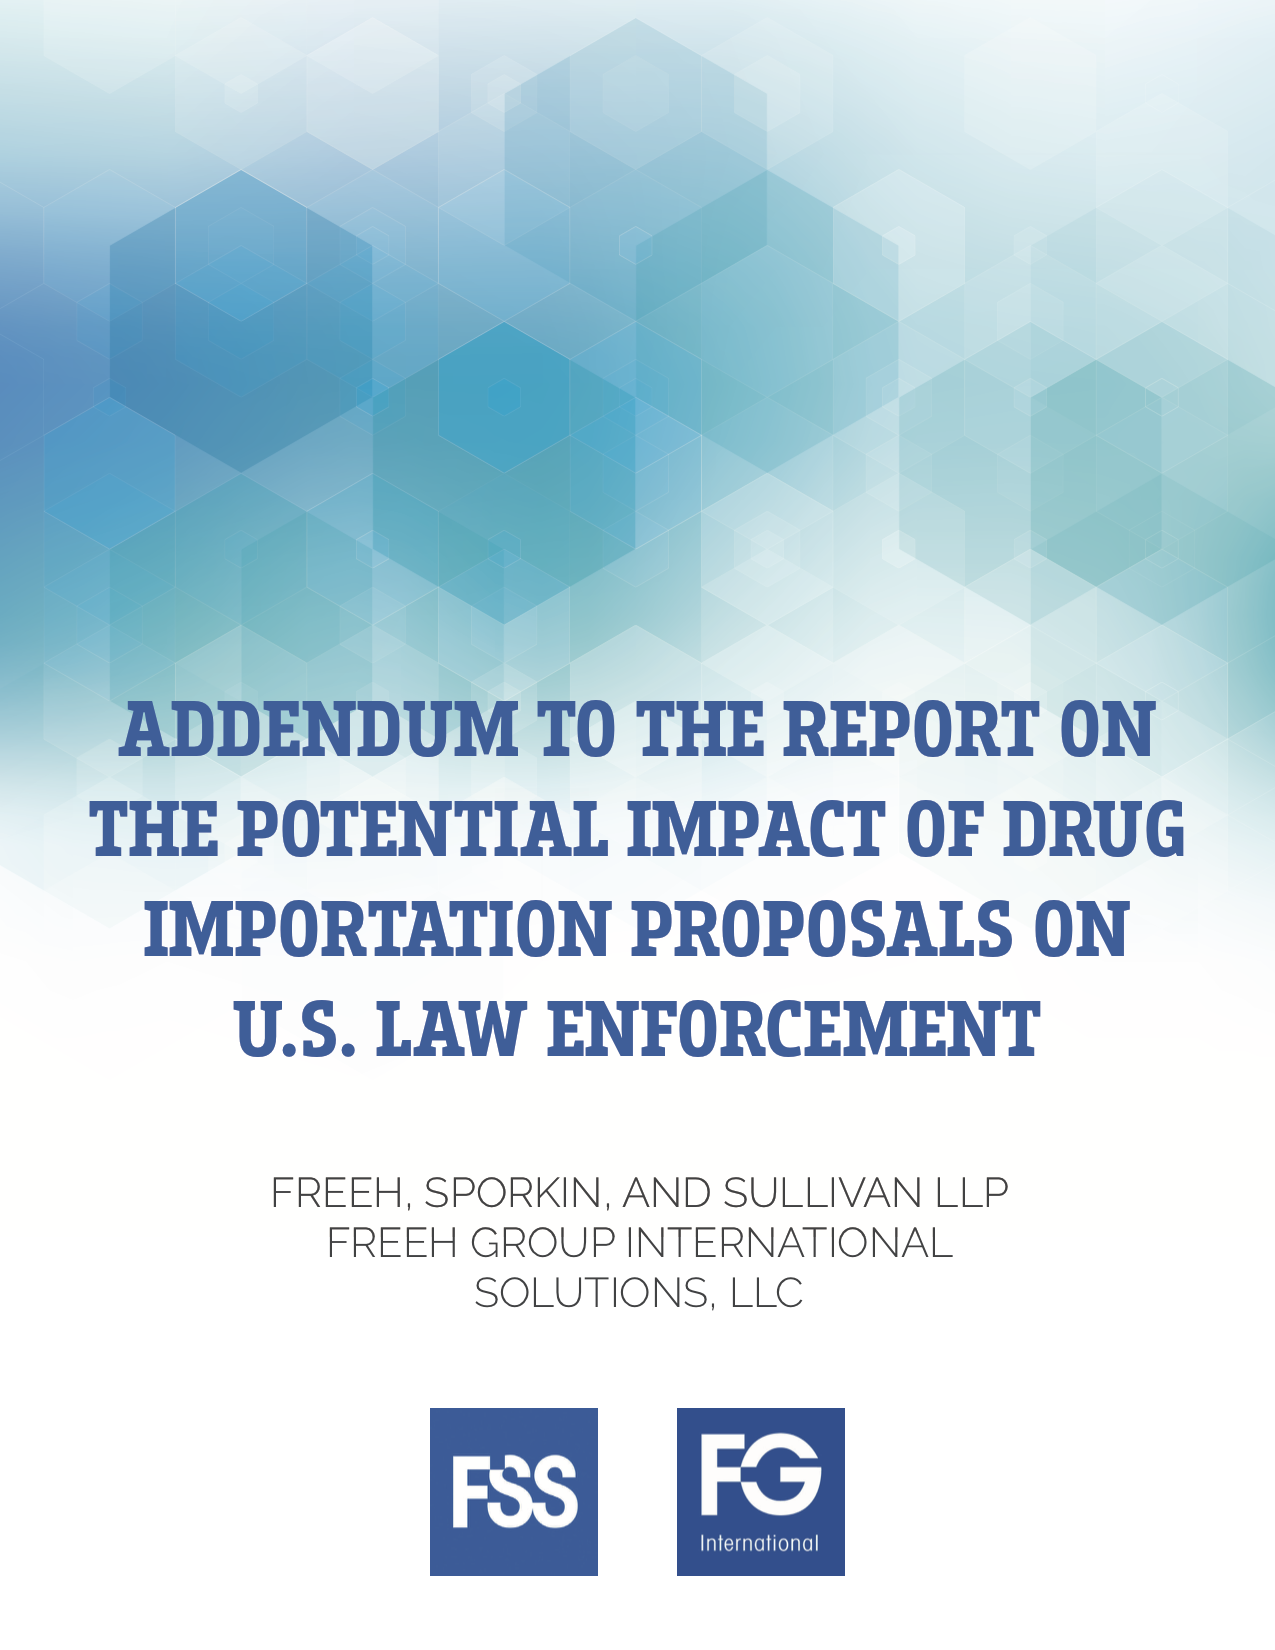 <a href="http://www.safemedicines.org/wp-content/uploads/2019/02/Freeh-Report-Addendum.pdf">Click here to read the Addendum.</a>